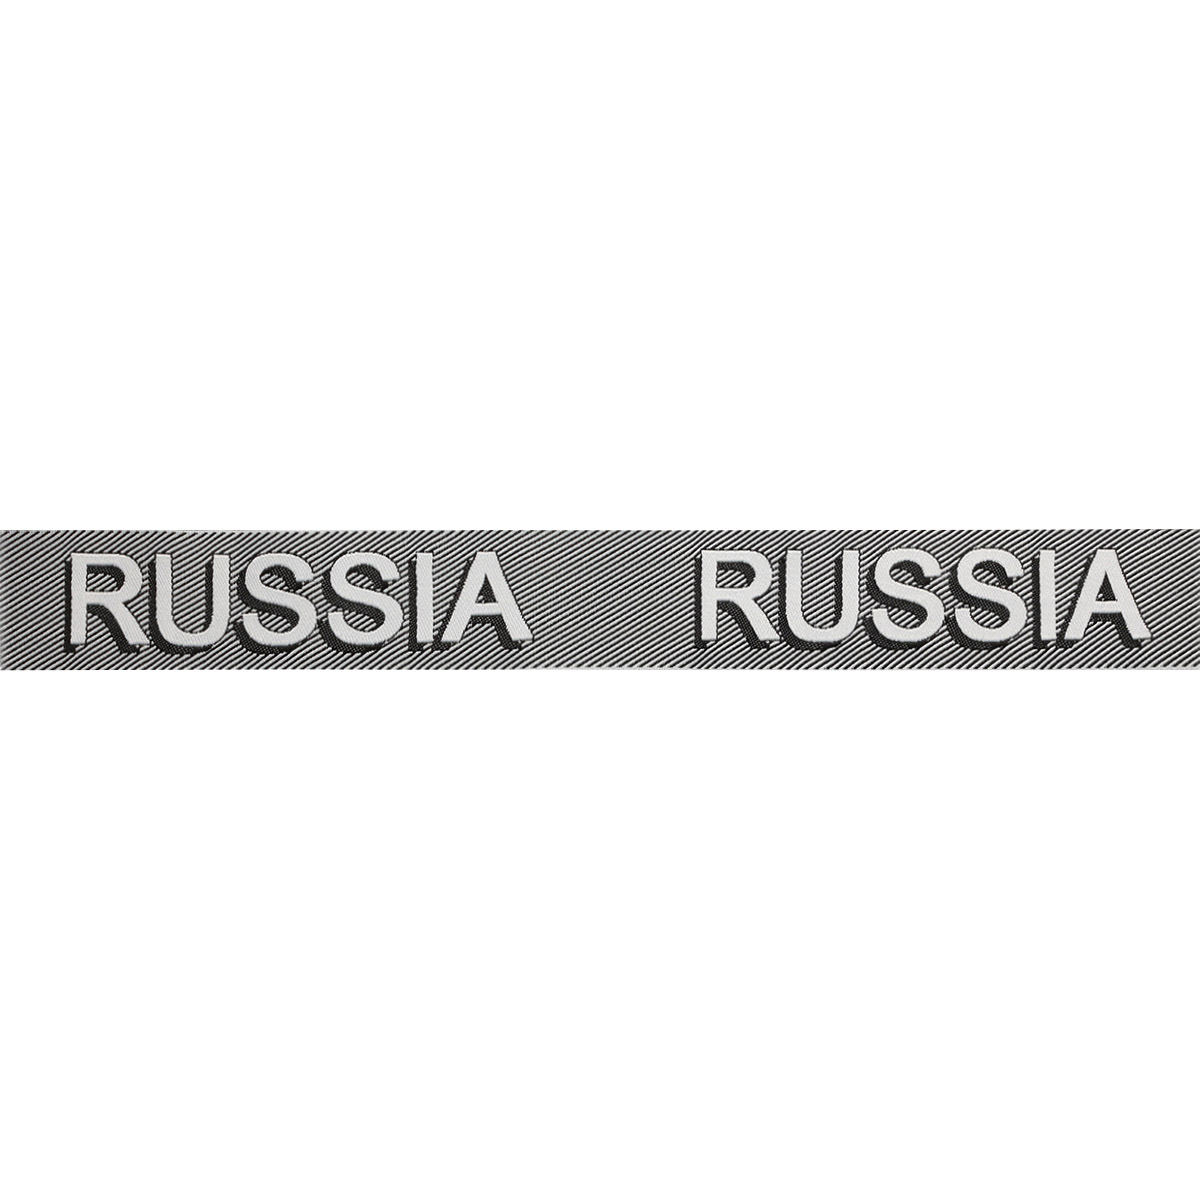 Лента отделочная с надписью 'Russia' 30мм*10м